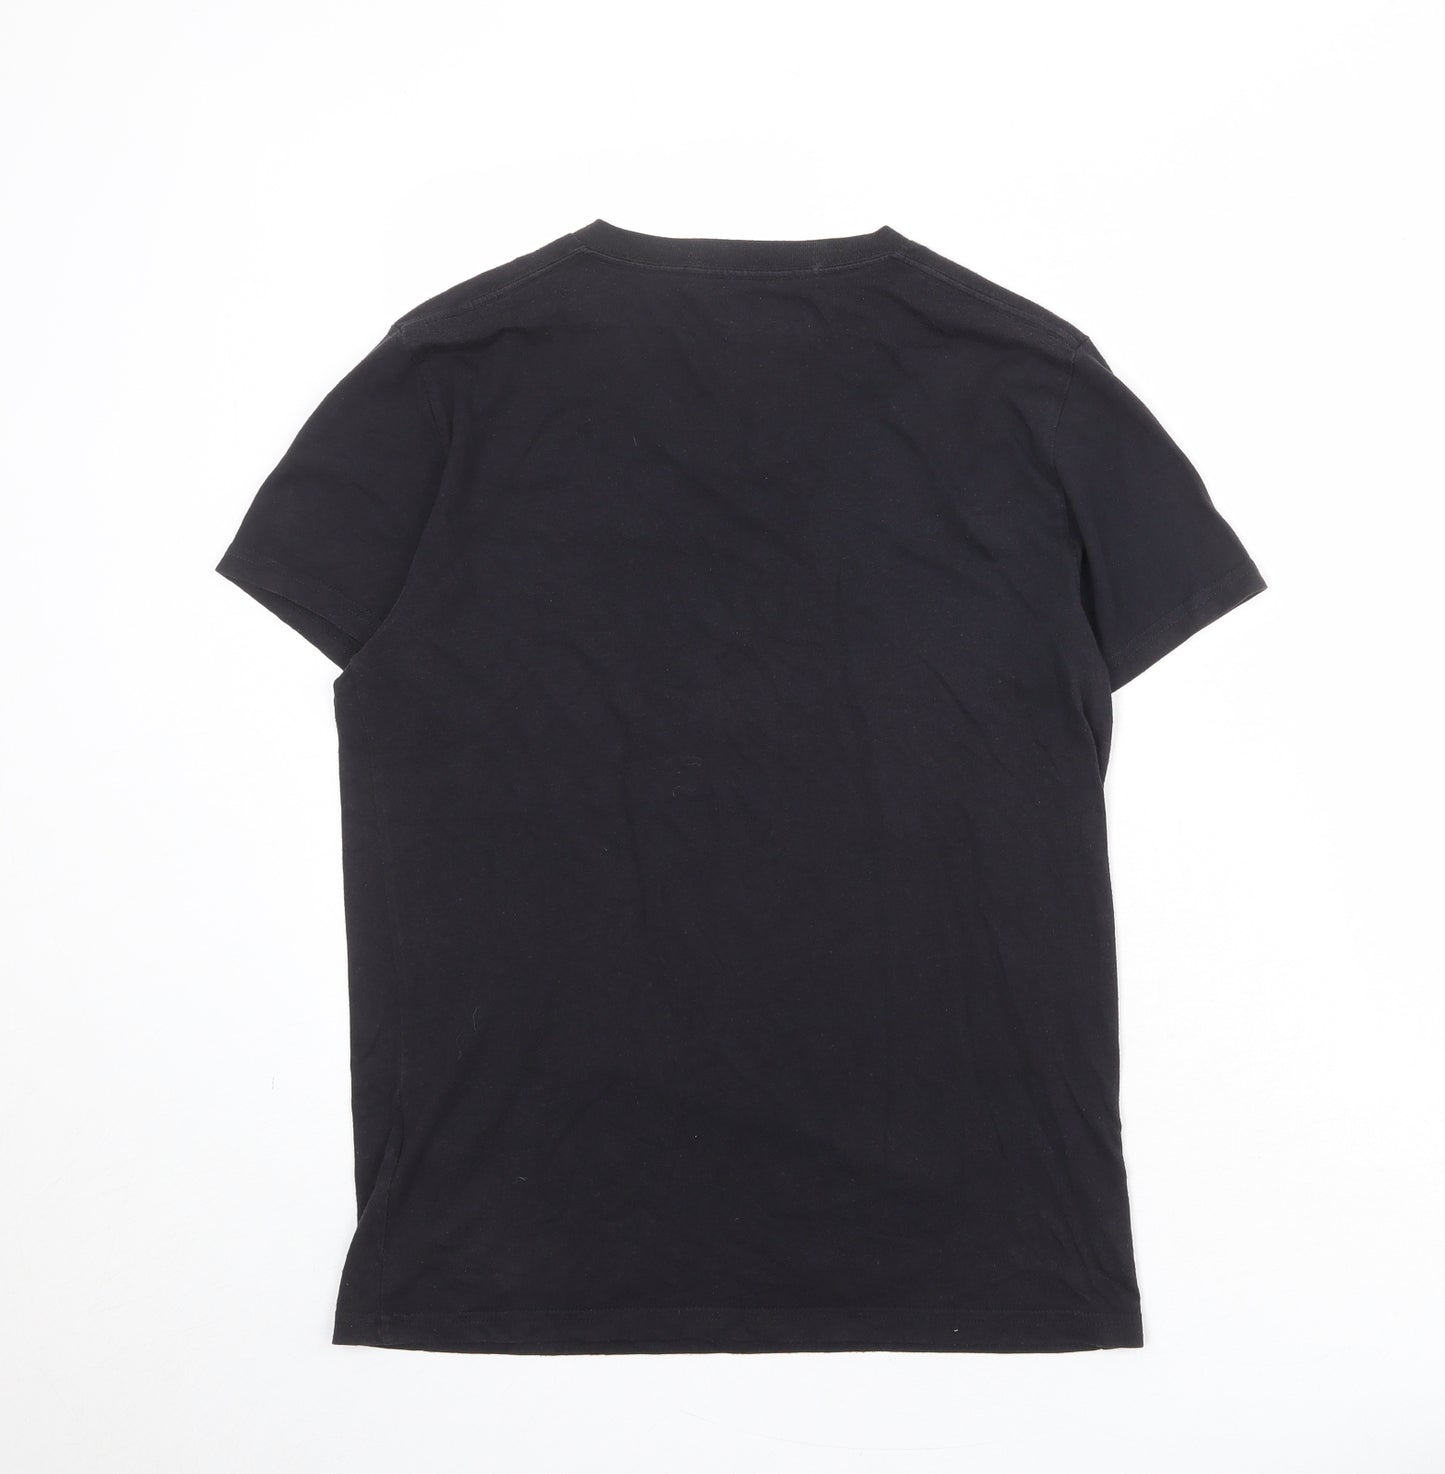 Hollister Mens Black Cotton T-Shirt Size XS V-Neck